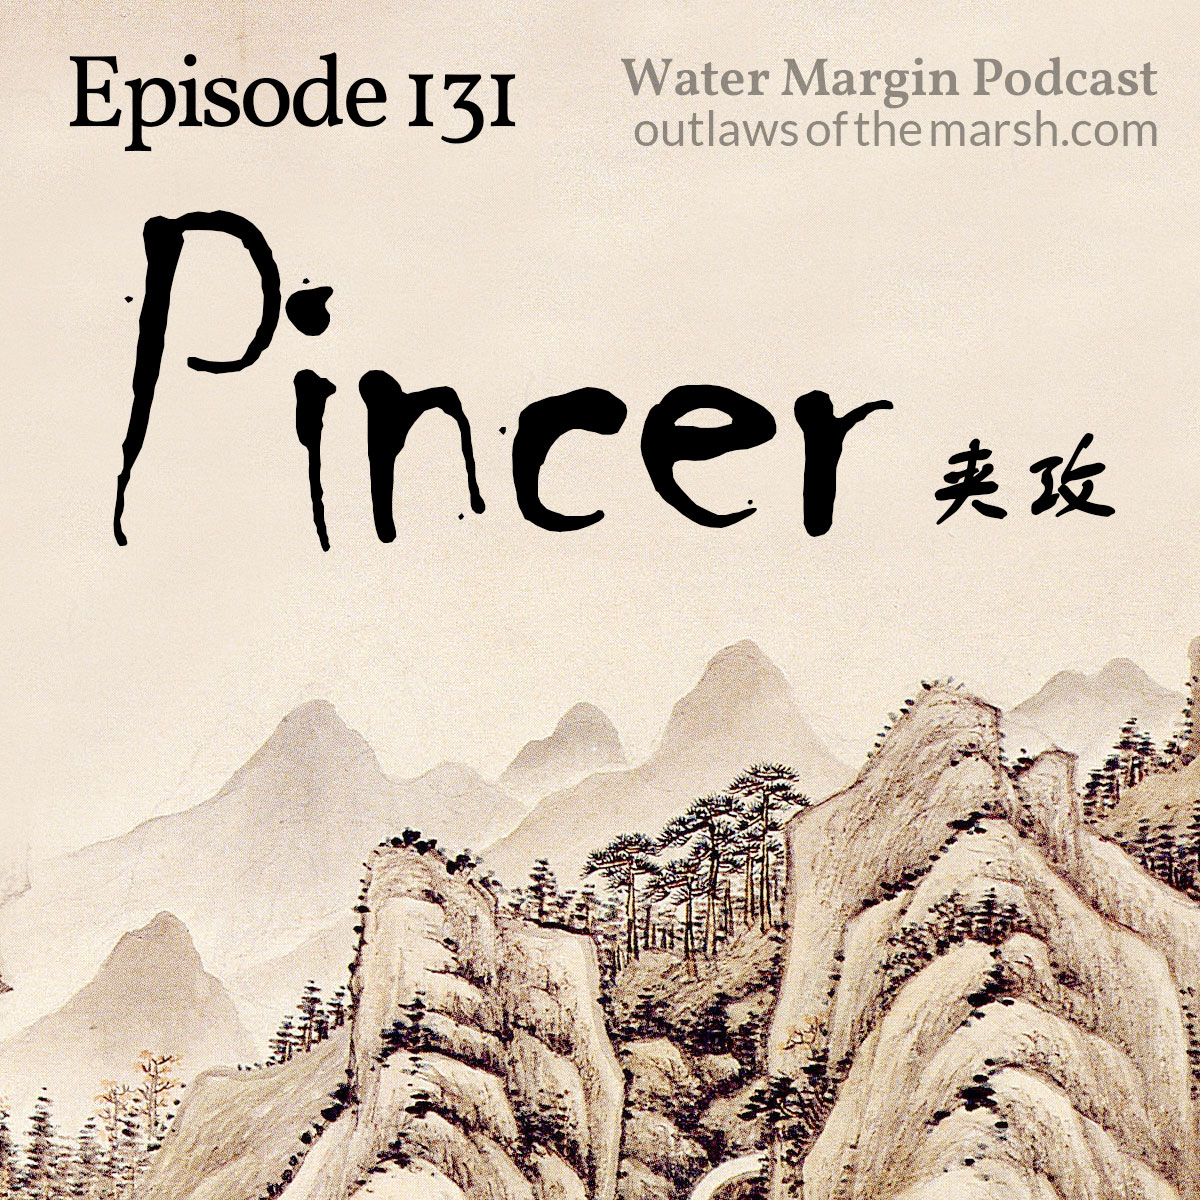 Water Margin Podcast: Episode 131